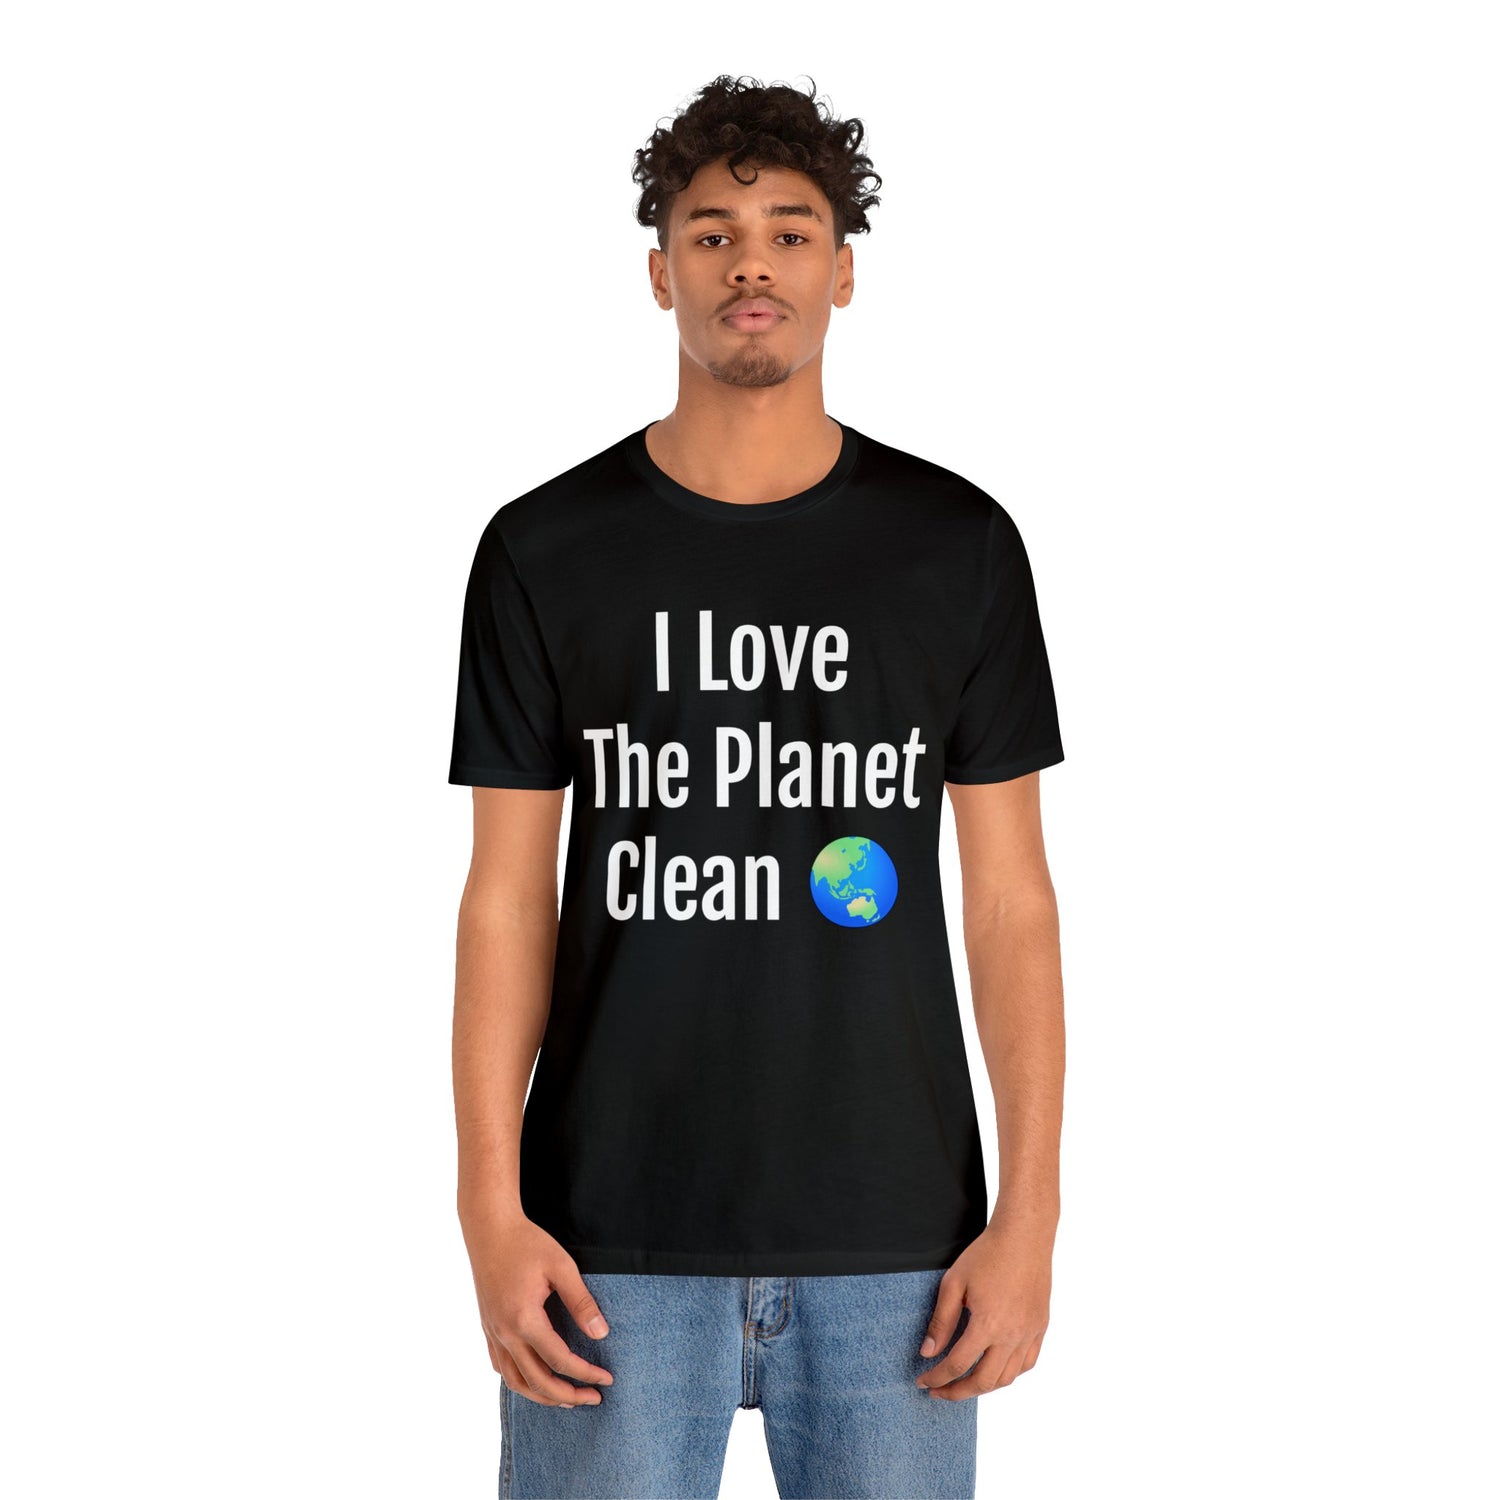 Clean Planet Activist T-Shirt T-Shirt Petrova Designs